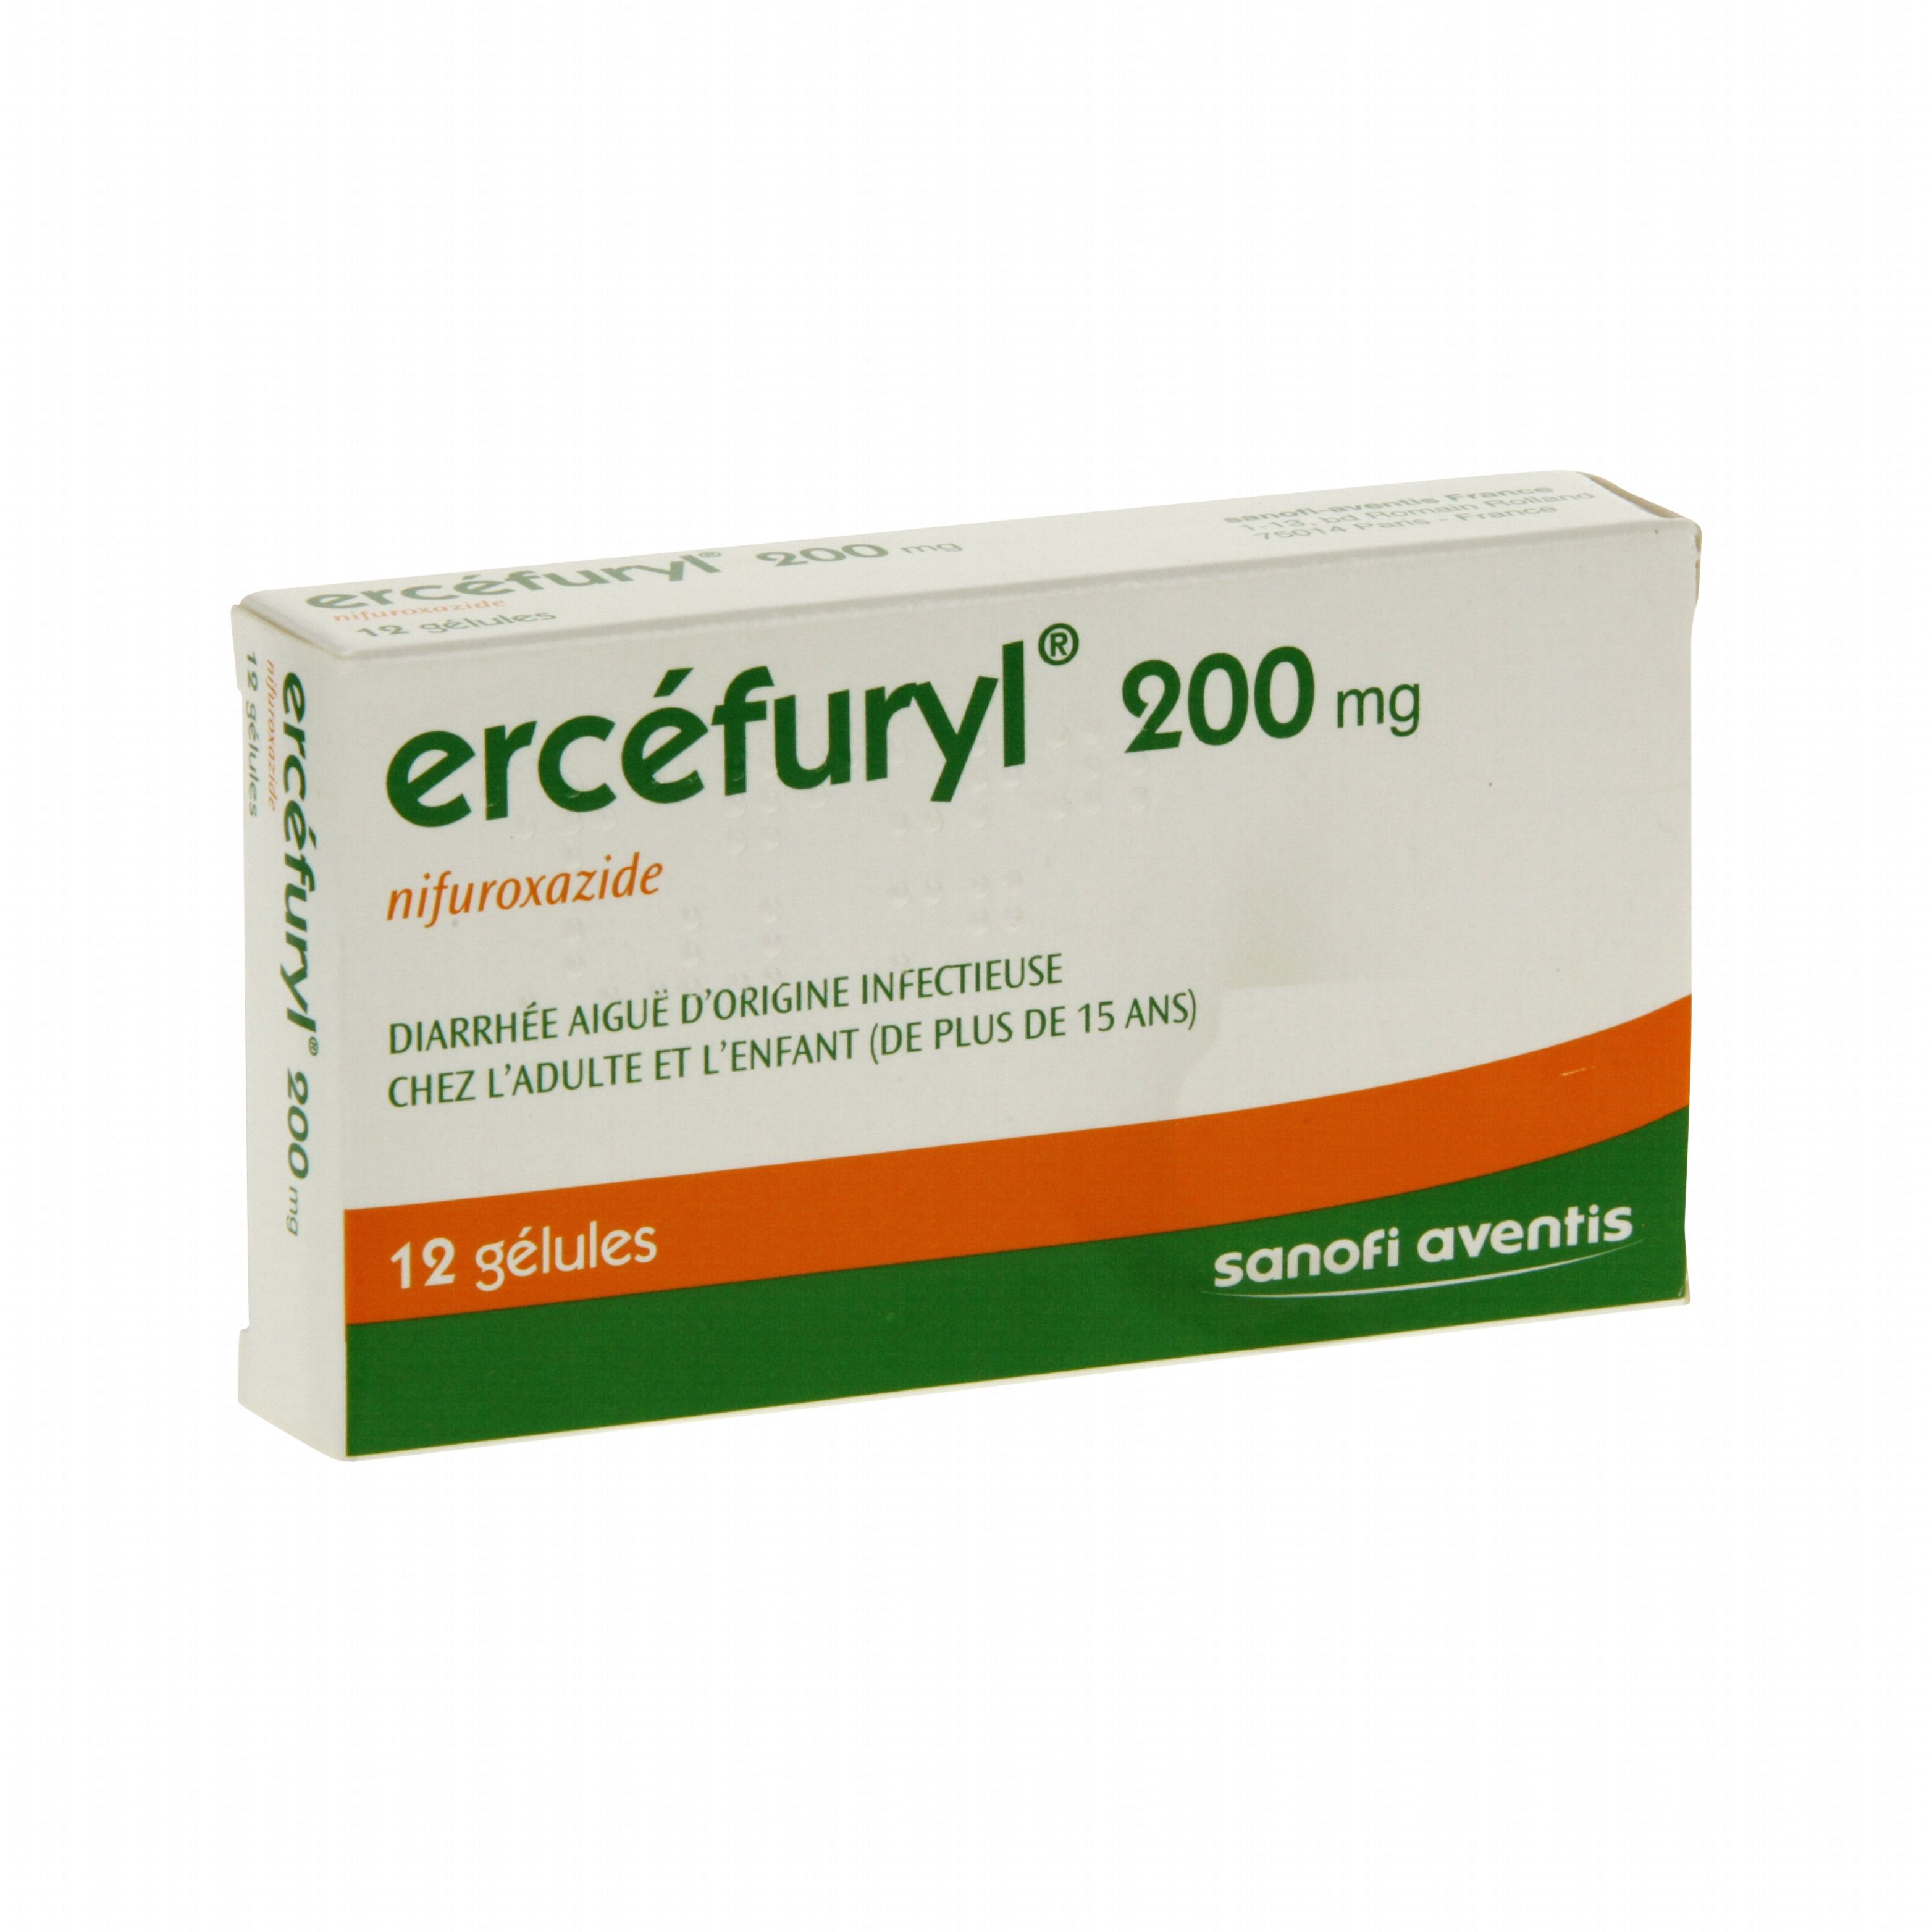 Ercefuryl 200 mg boîte de 12 gélules Sanofi Aventis (médicament conseil .